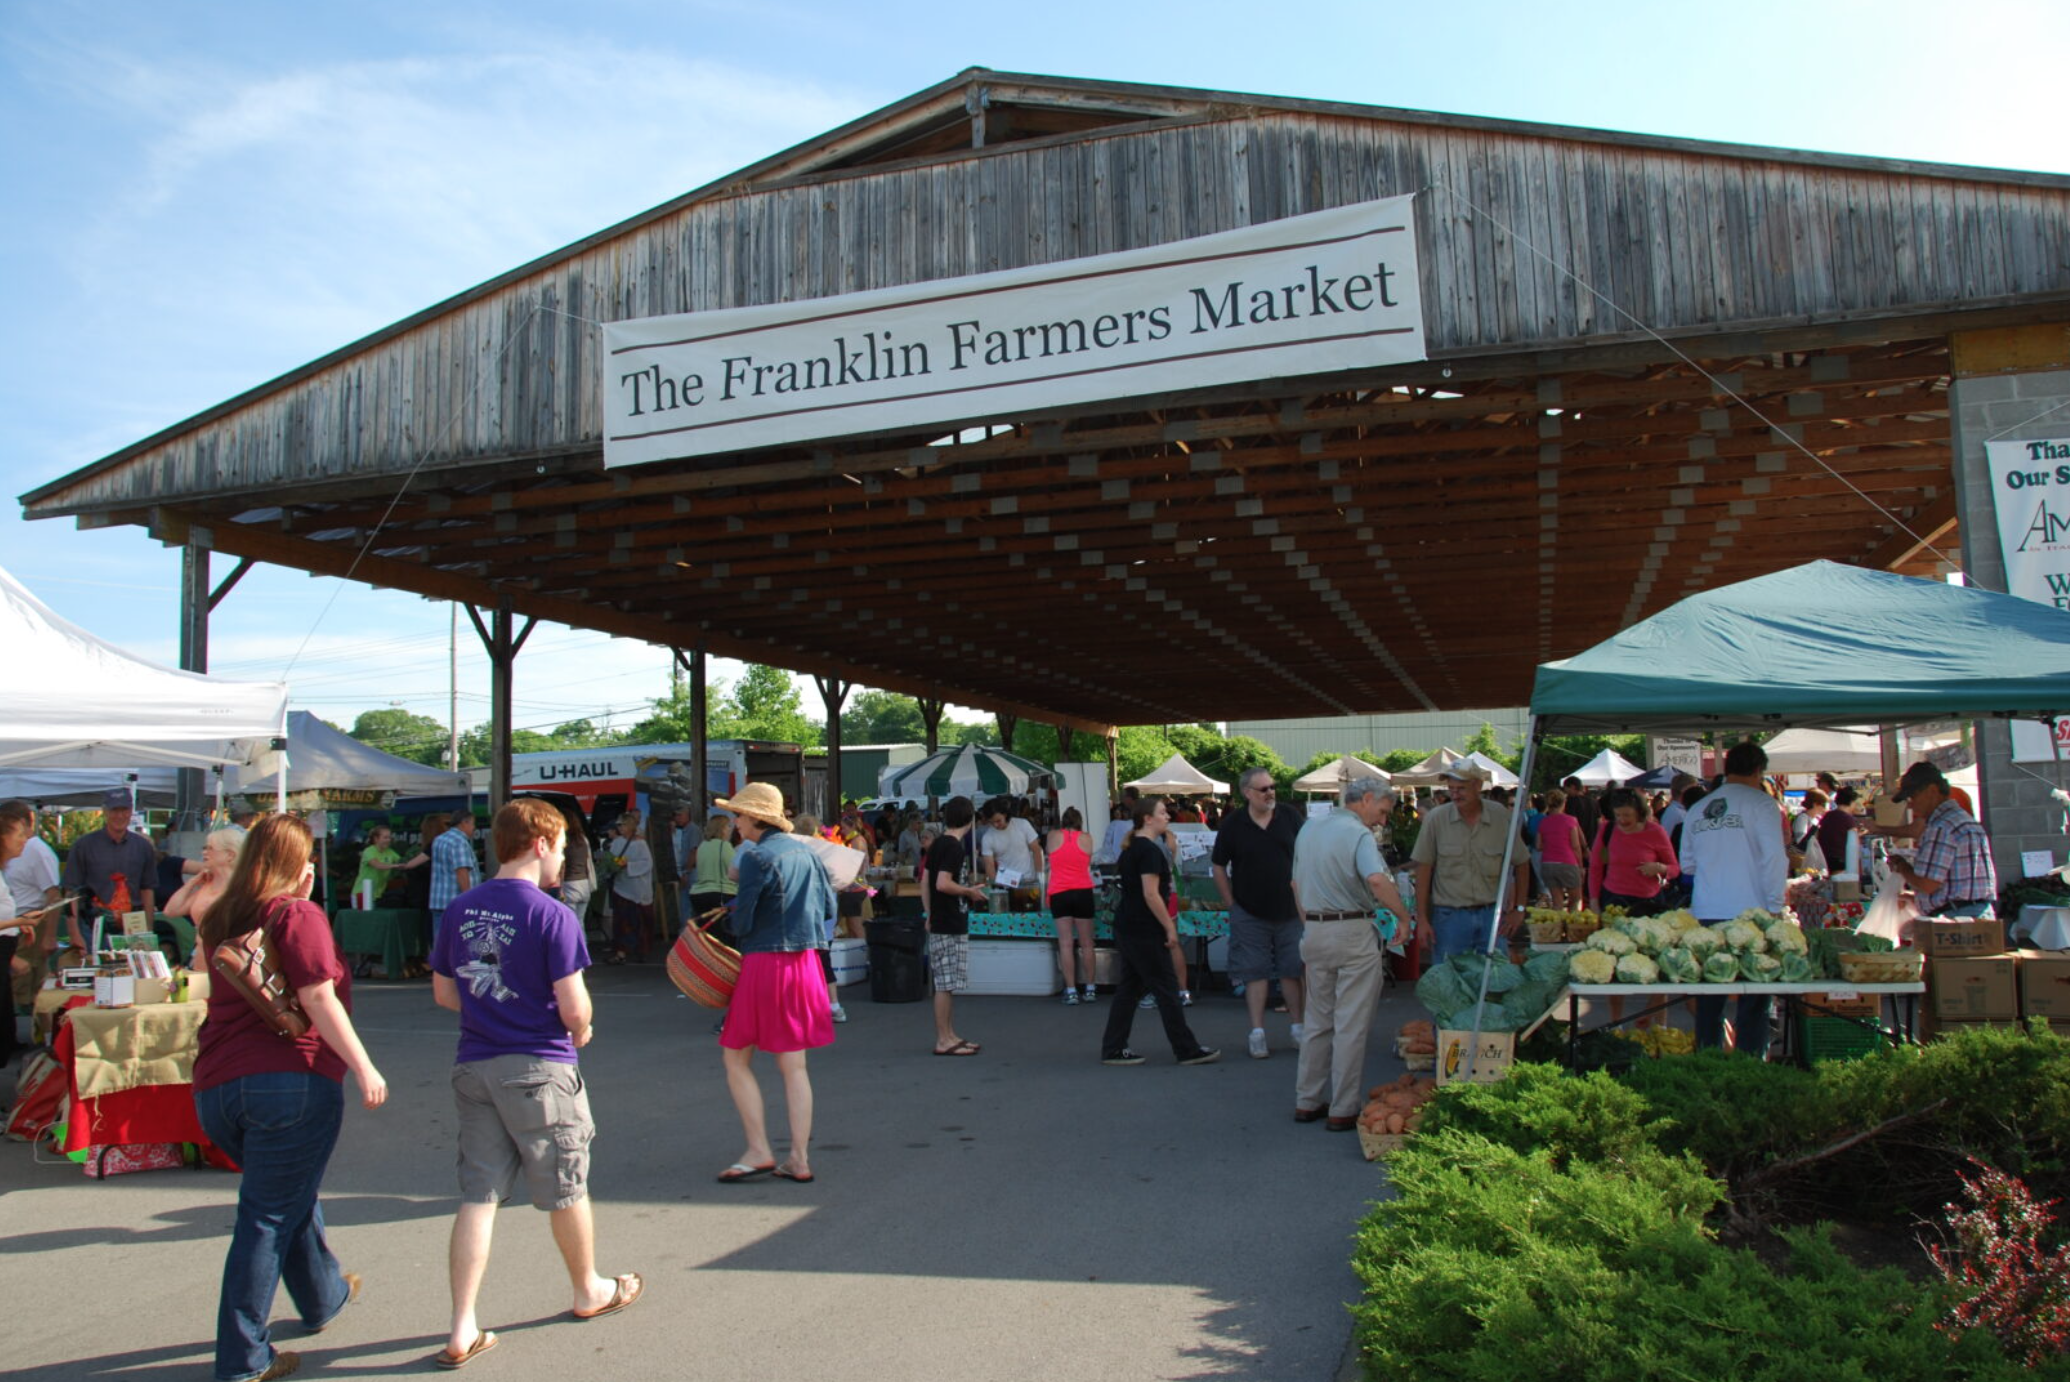 The Franklin Farmers Market